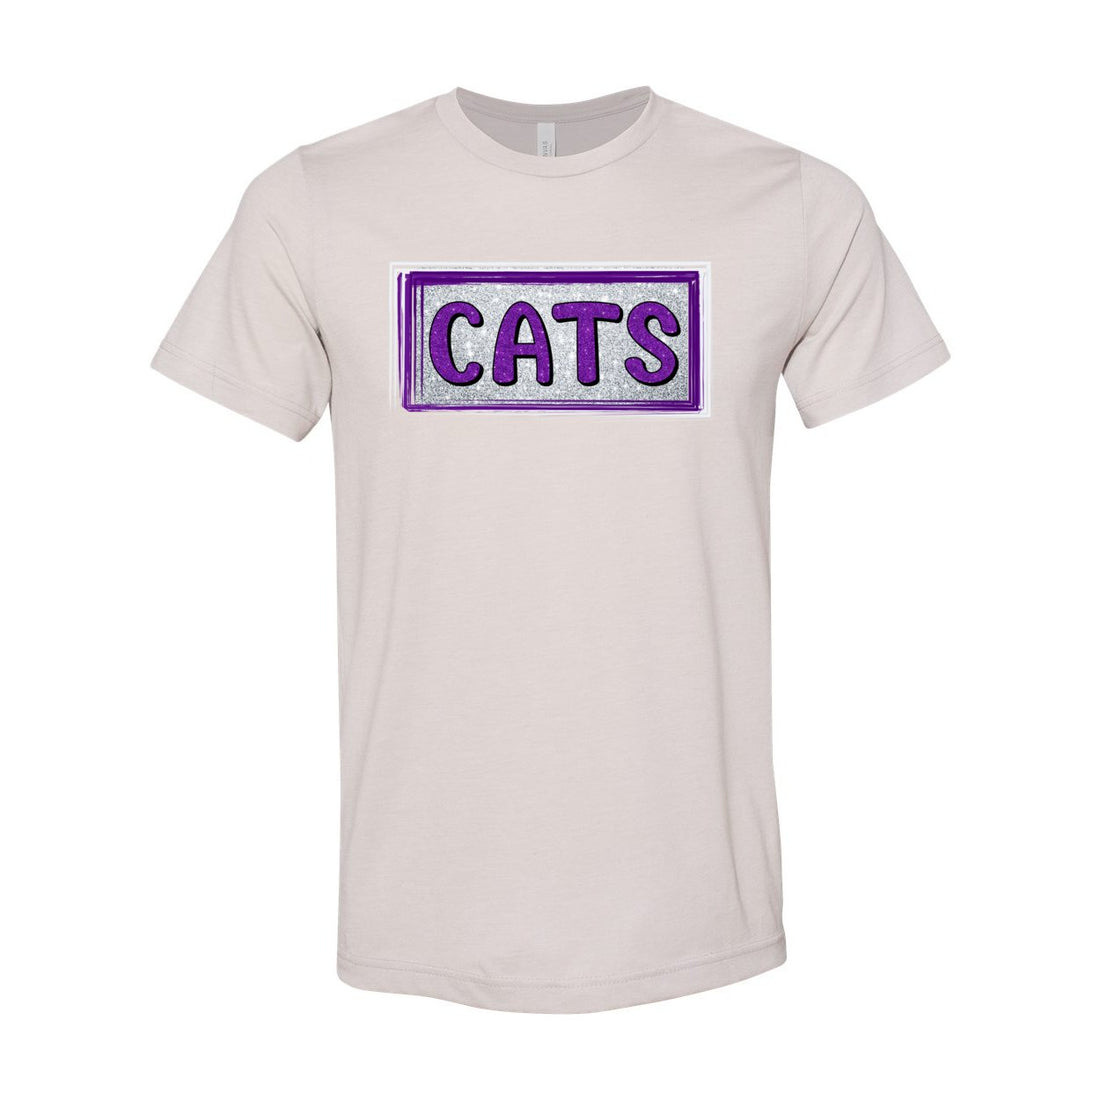 CATS Short Sleeve Jersey Tee - T-Shirts - Positively Sassy - CATS Short Sleeve Jersey Tee